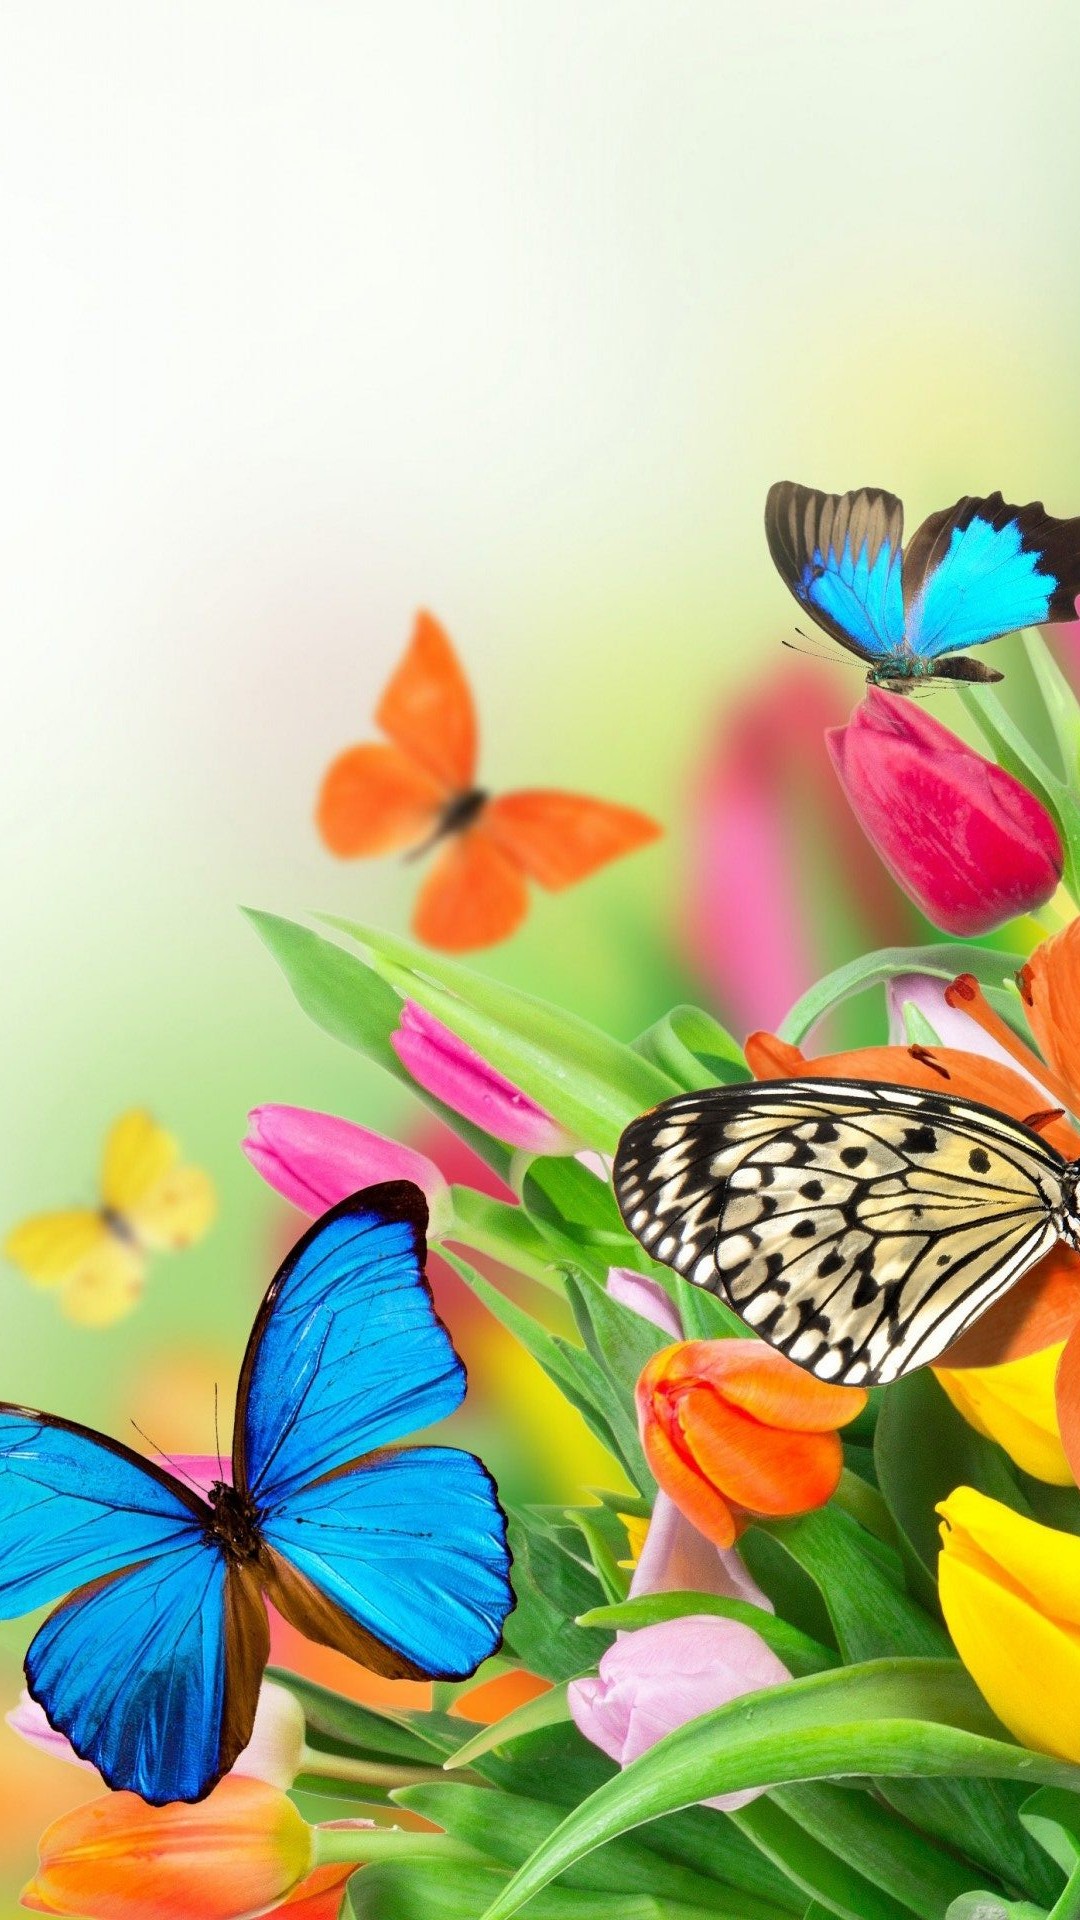 Wallpaper Butterfly iPhone resolution 1080x1920